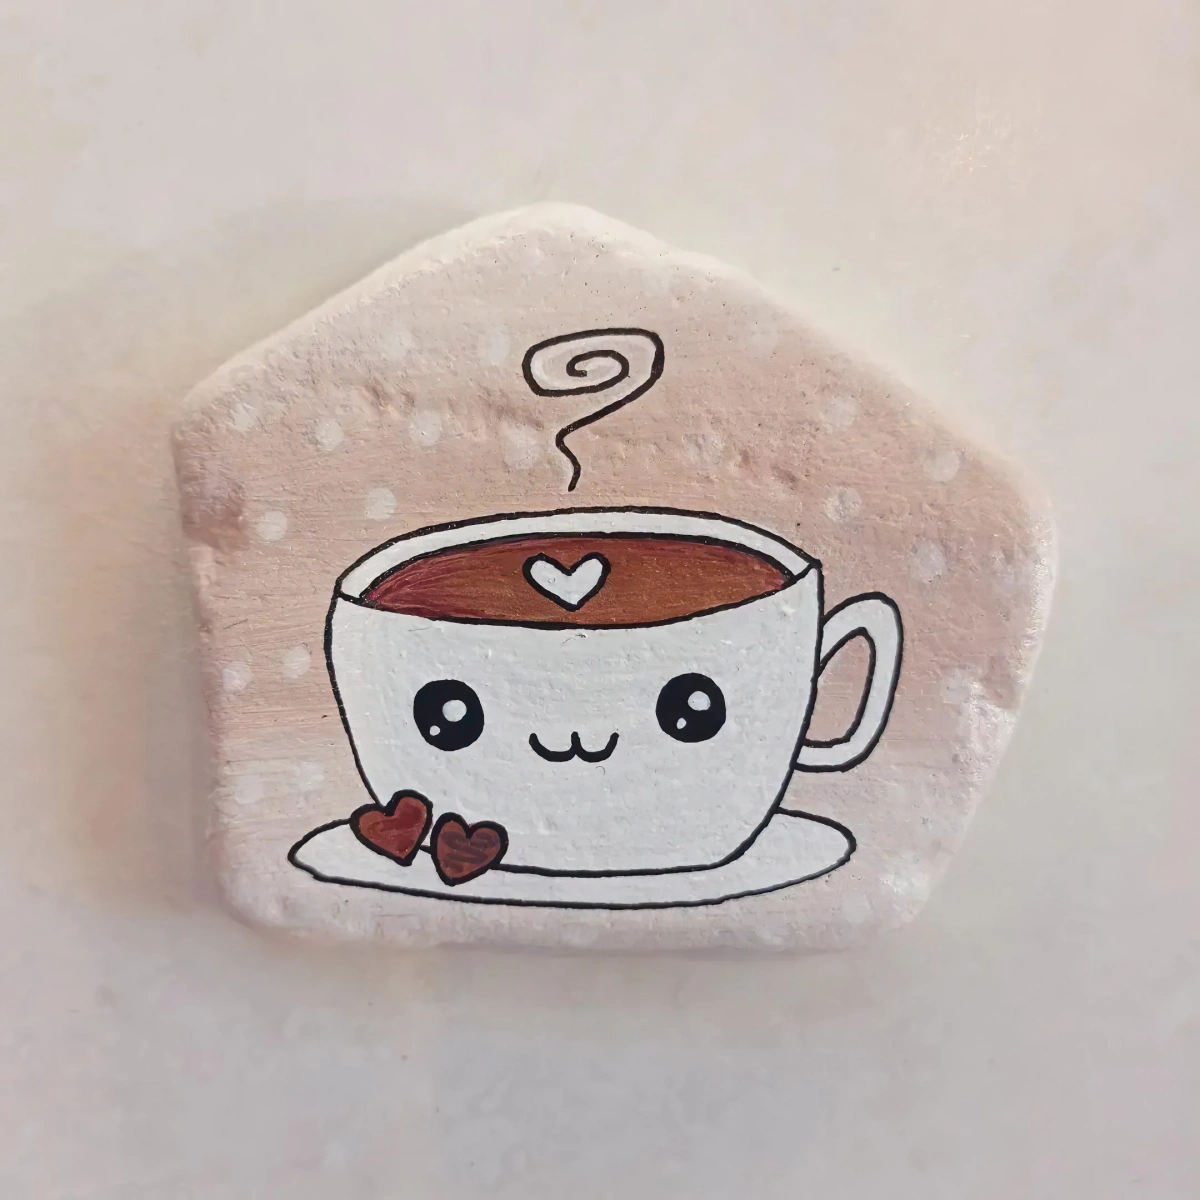 dessin cafe tasse coeur biscuits visage sourire mug boisson chaude